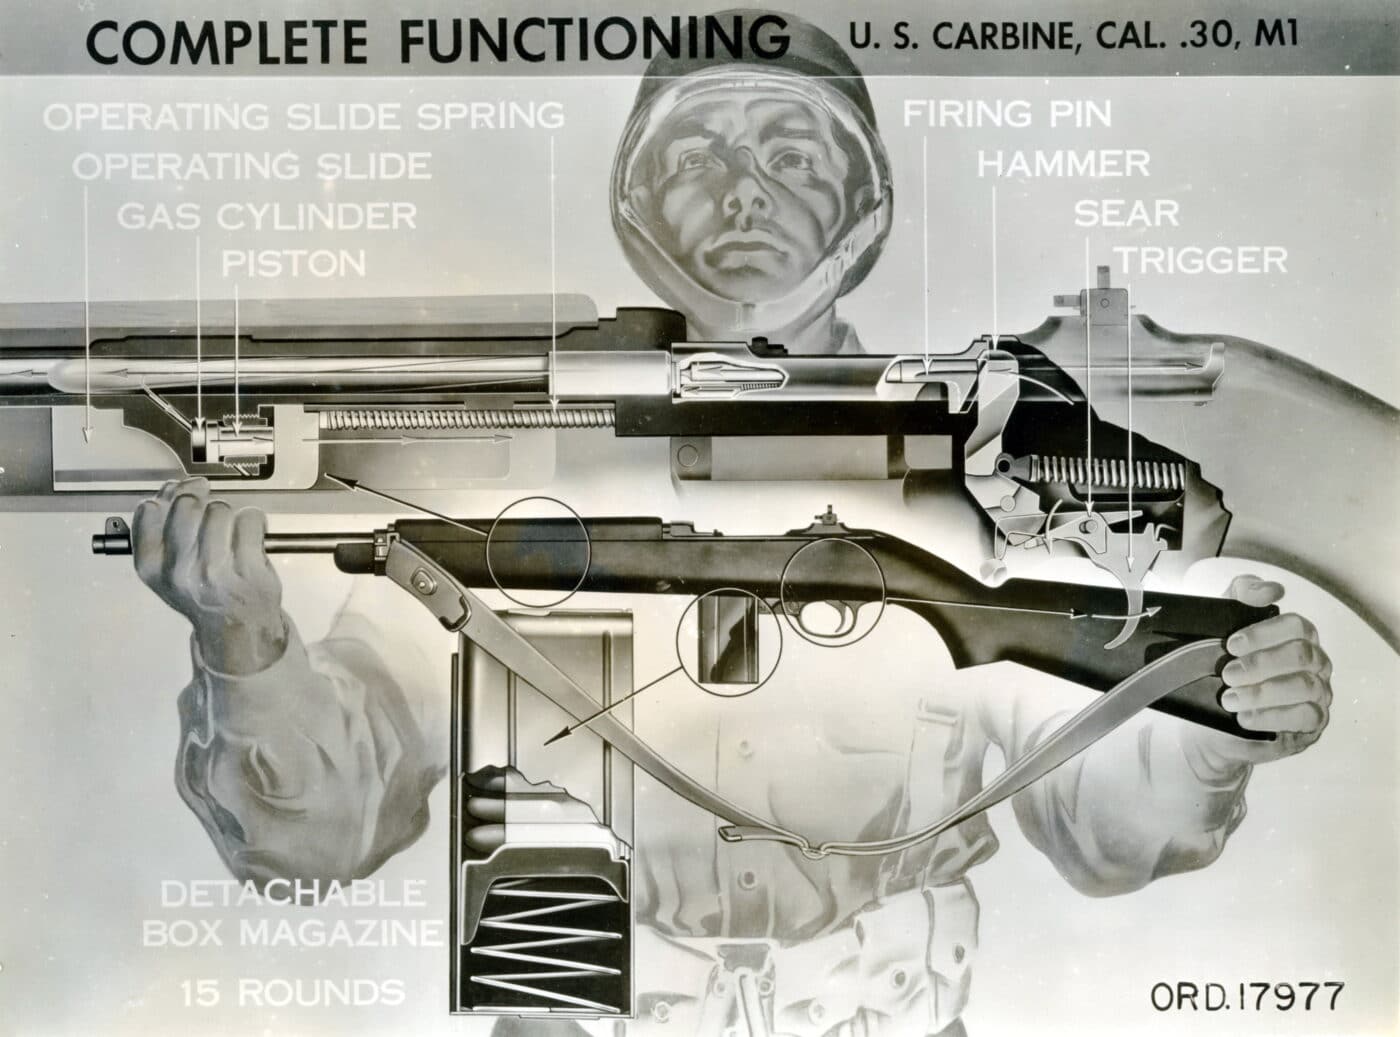 Diagram of M1 Carbine details